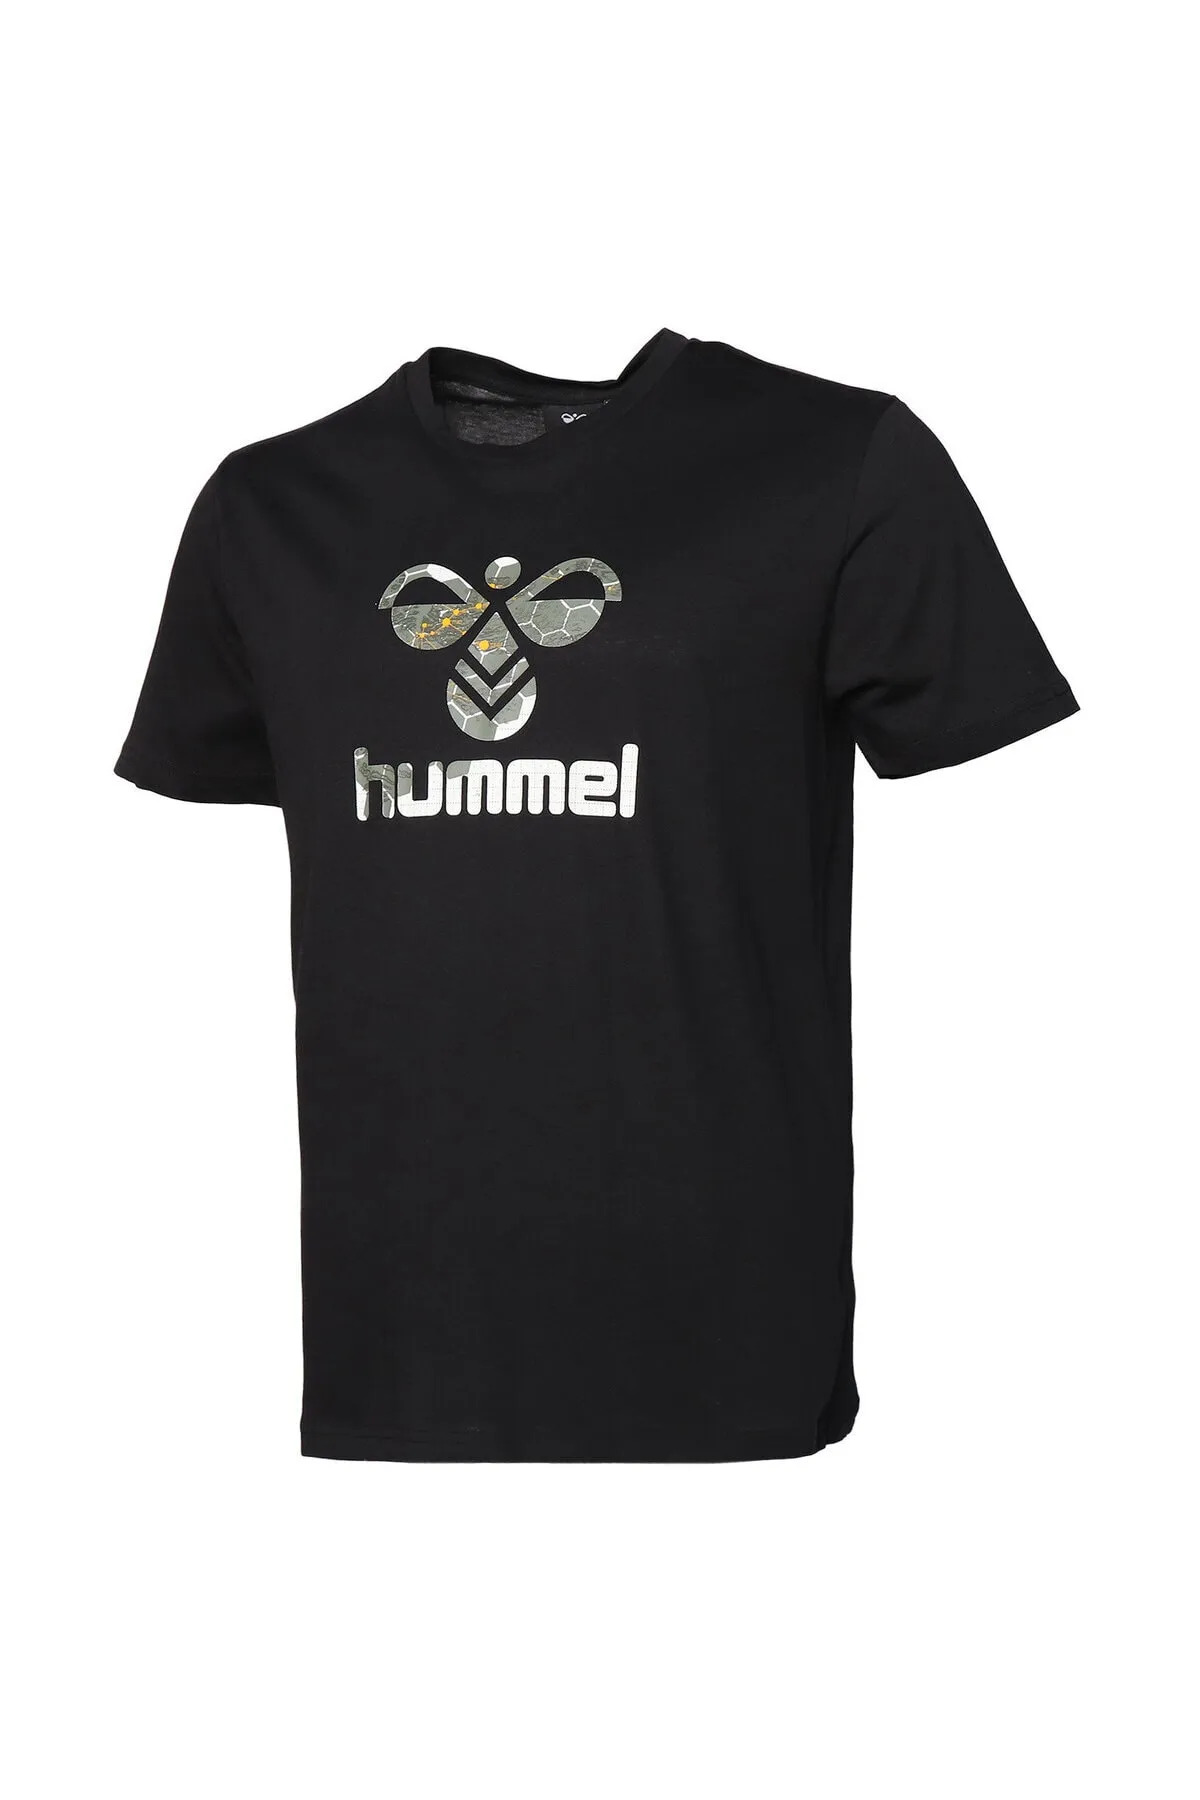 HUMMEL تیشرت مردانه مشکی Hmldante T-Shirt S/S